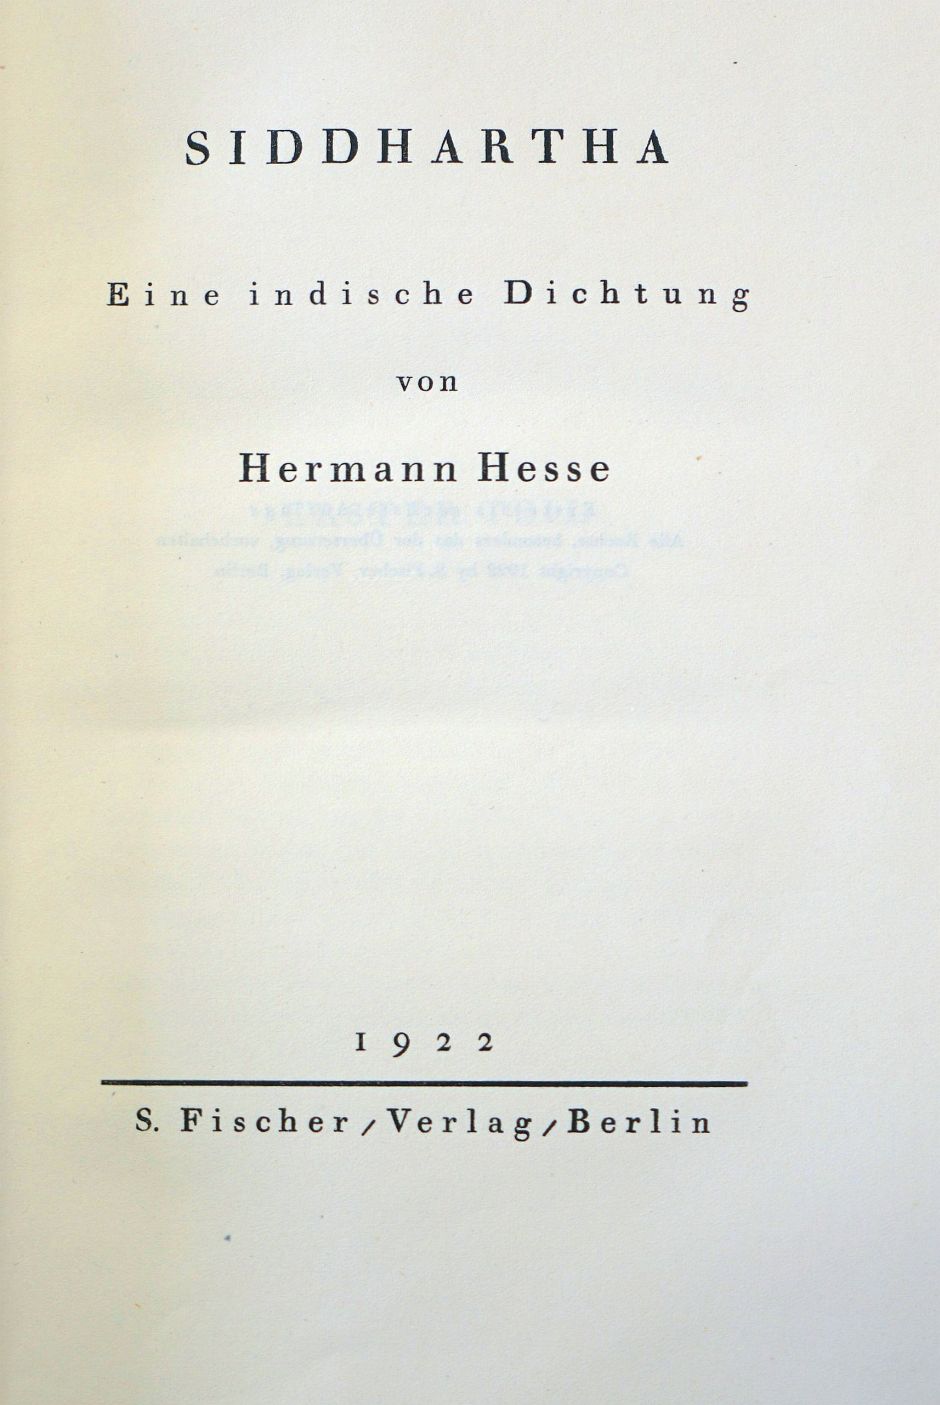 Lot 3180, Auction  115, Hesse, Hermann, Siddhartha